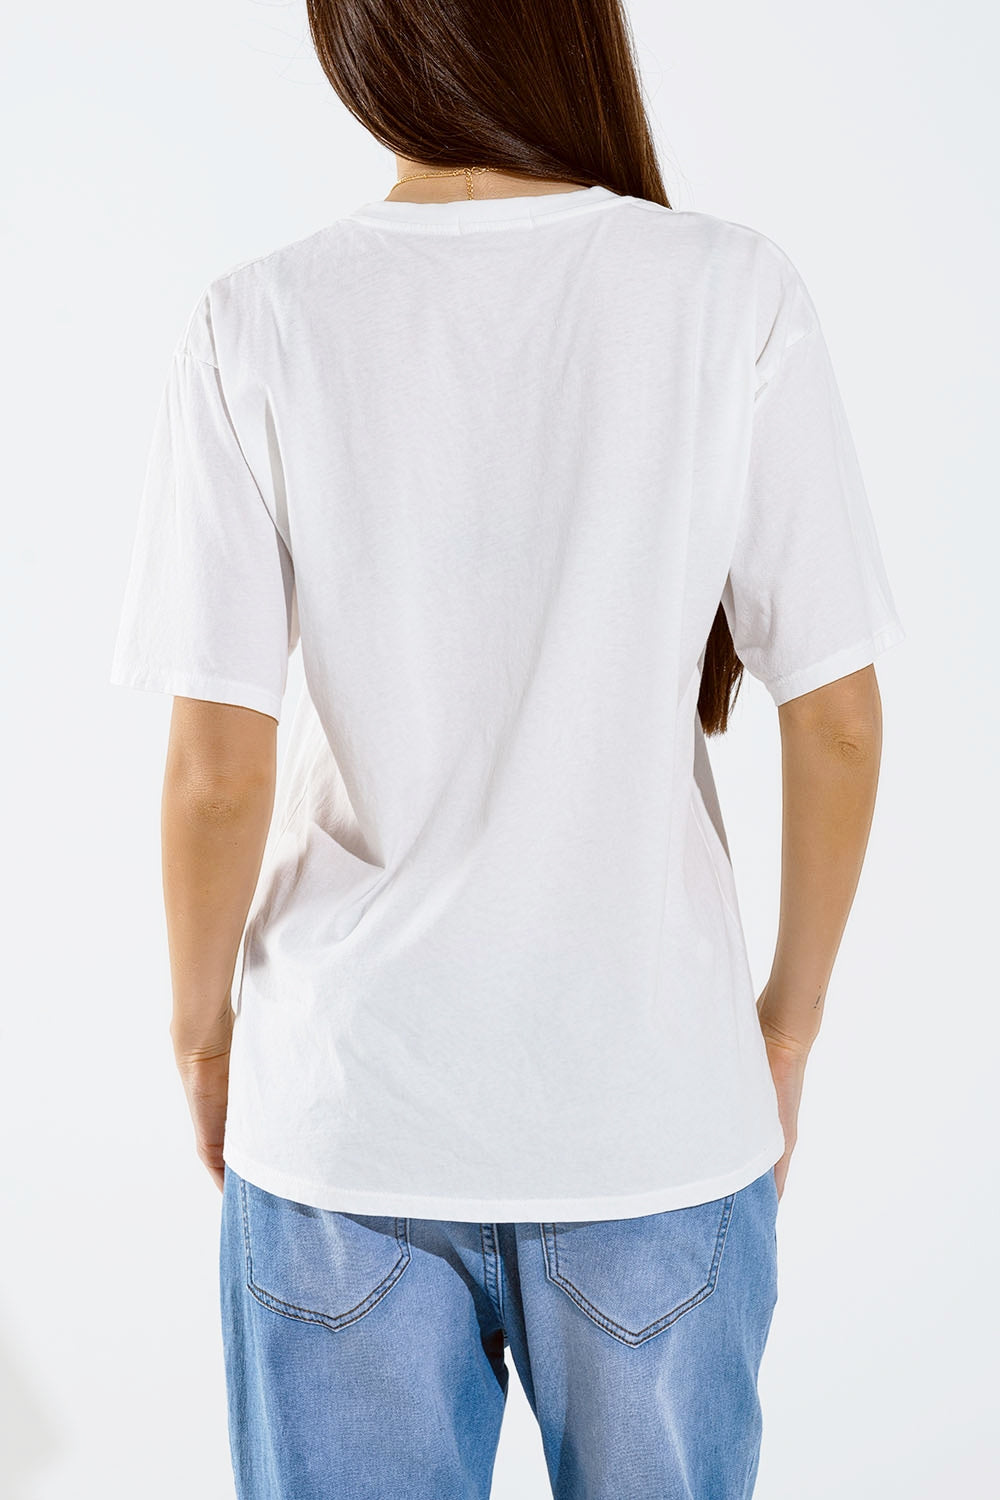 Arizona T-shirt met adelaar digitale opdruk in wit